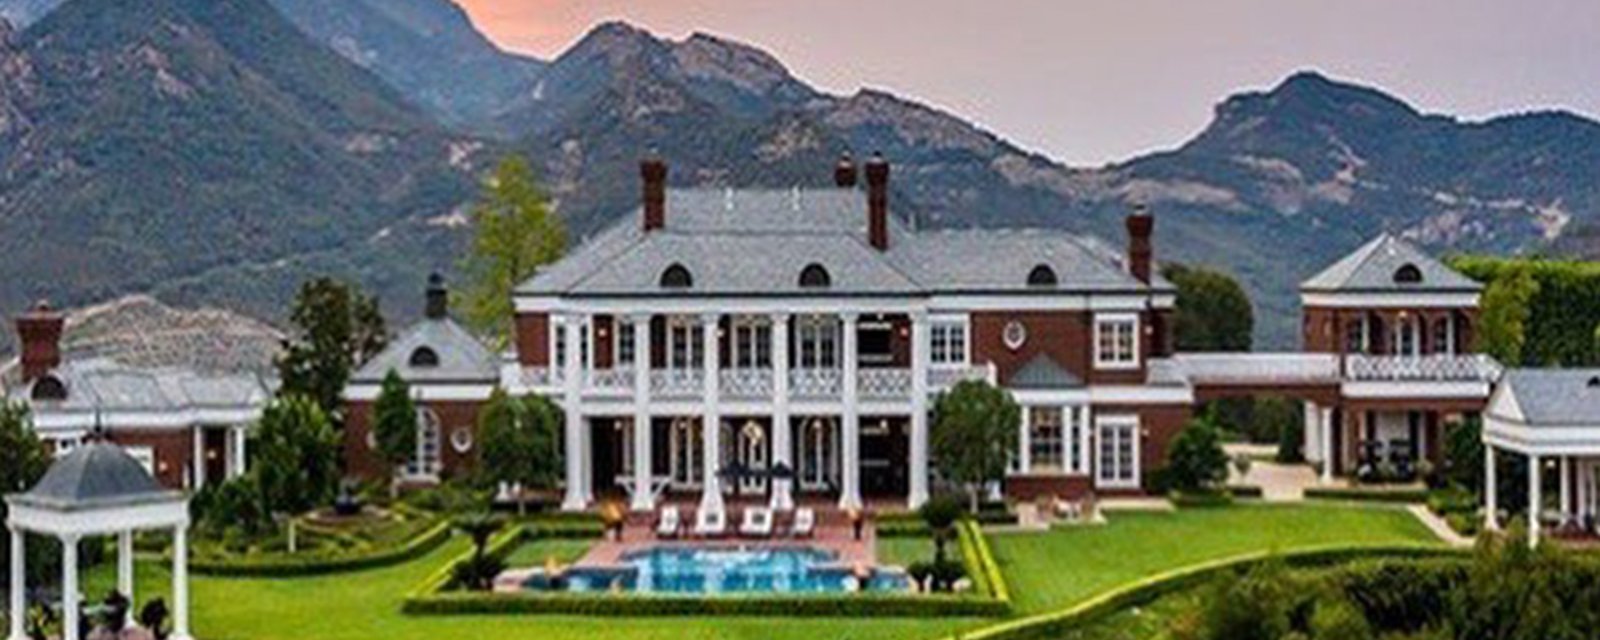 Wayne Gretzky's incredible California mansion estate hits the open market